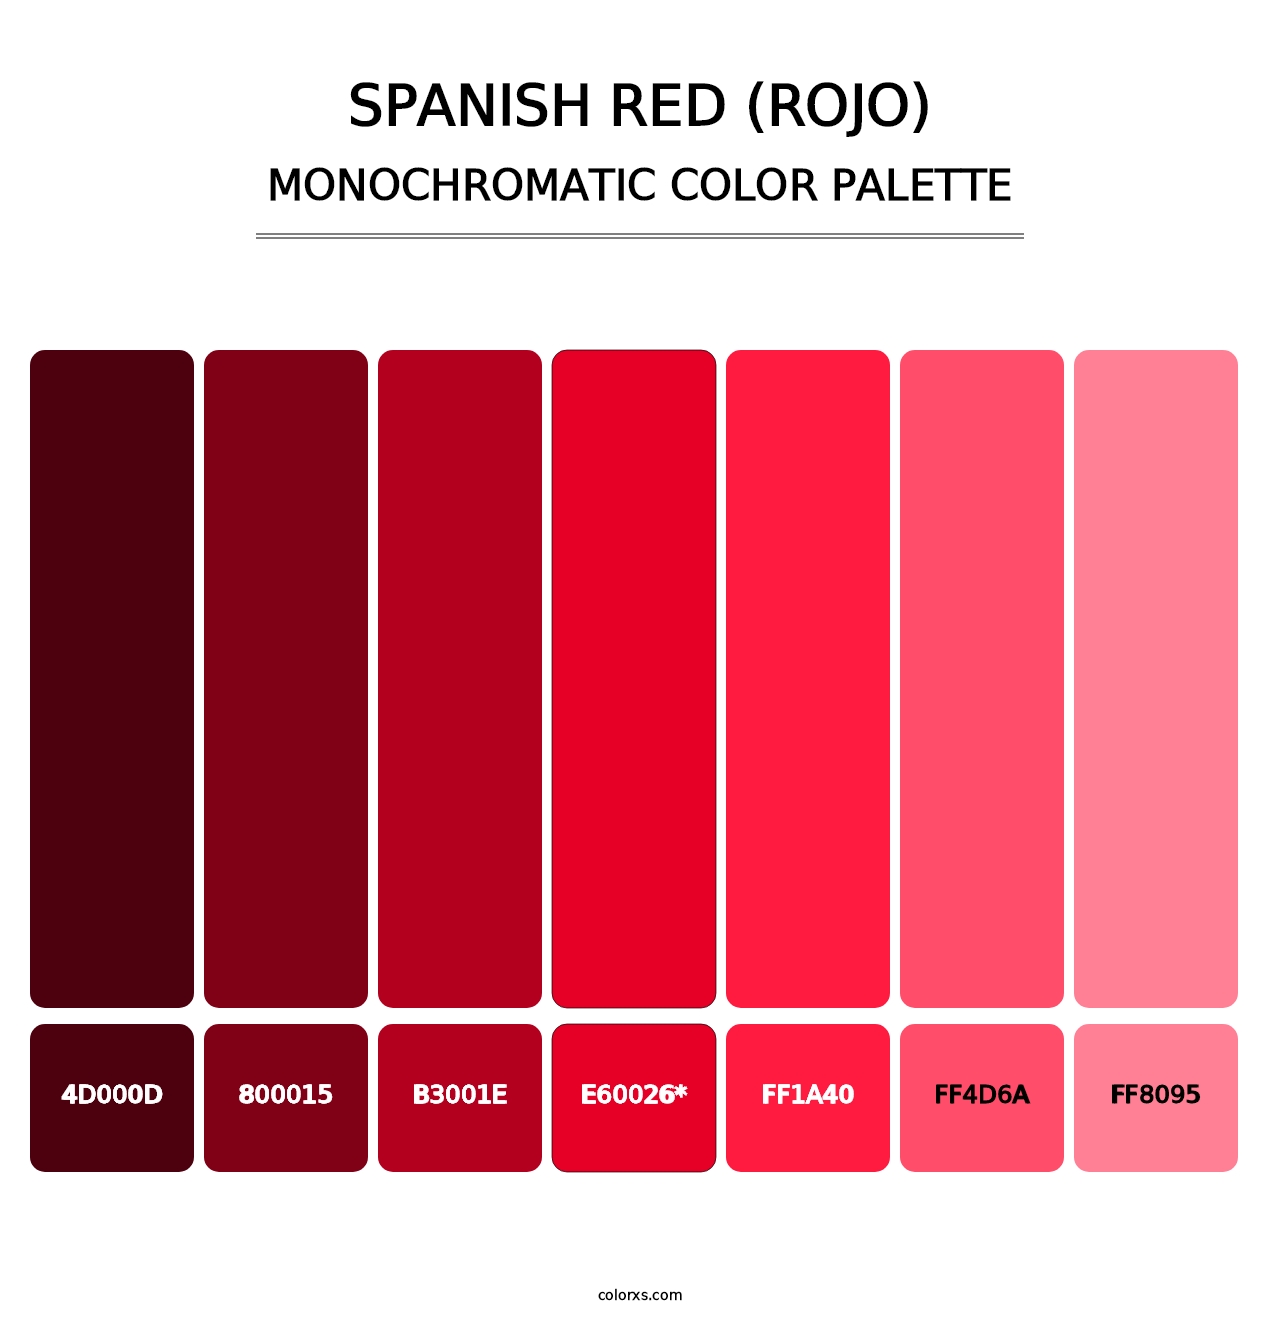 Spanish Red (Rojo) - Monochromatic Color Palette